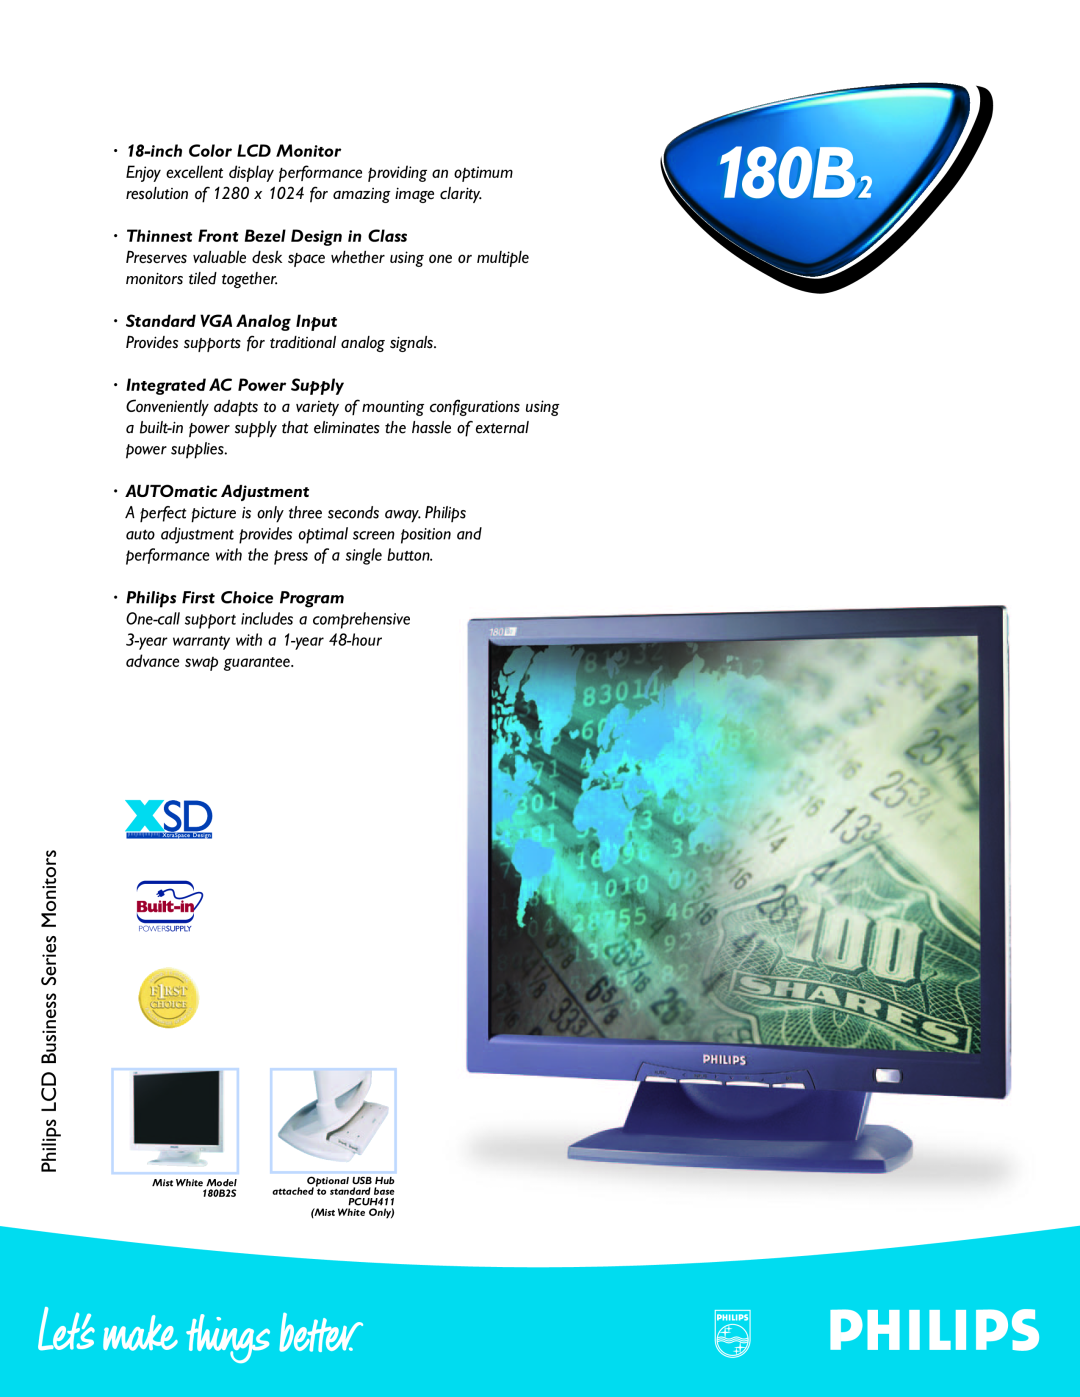 Philips 180B2 warranty Philips LCD Business Series Monitors, · 18-inchColor LCD Monitor, ·Standard VGA Analog Input 